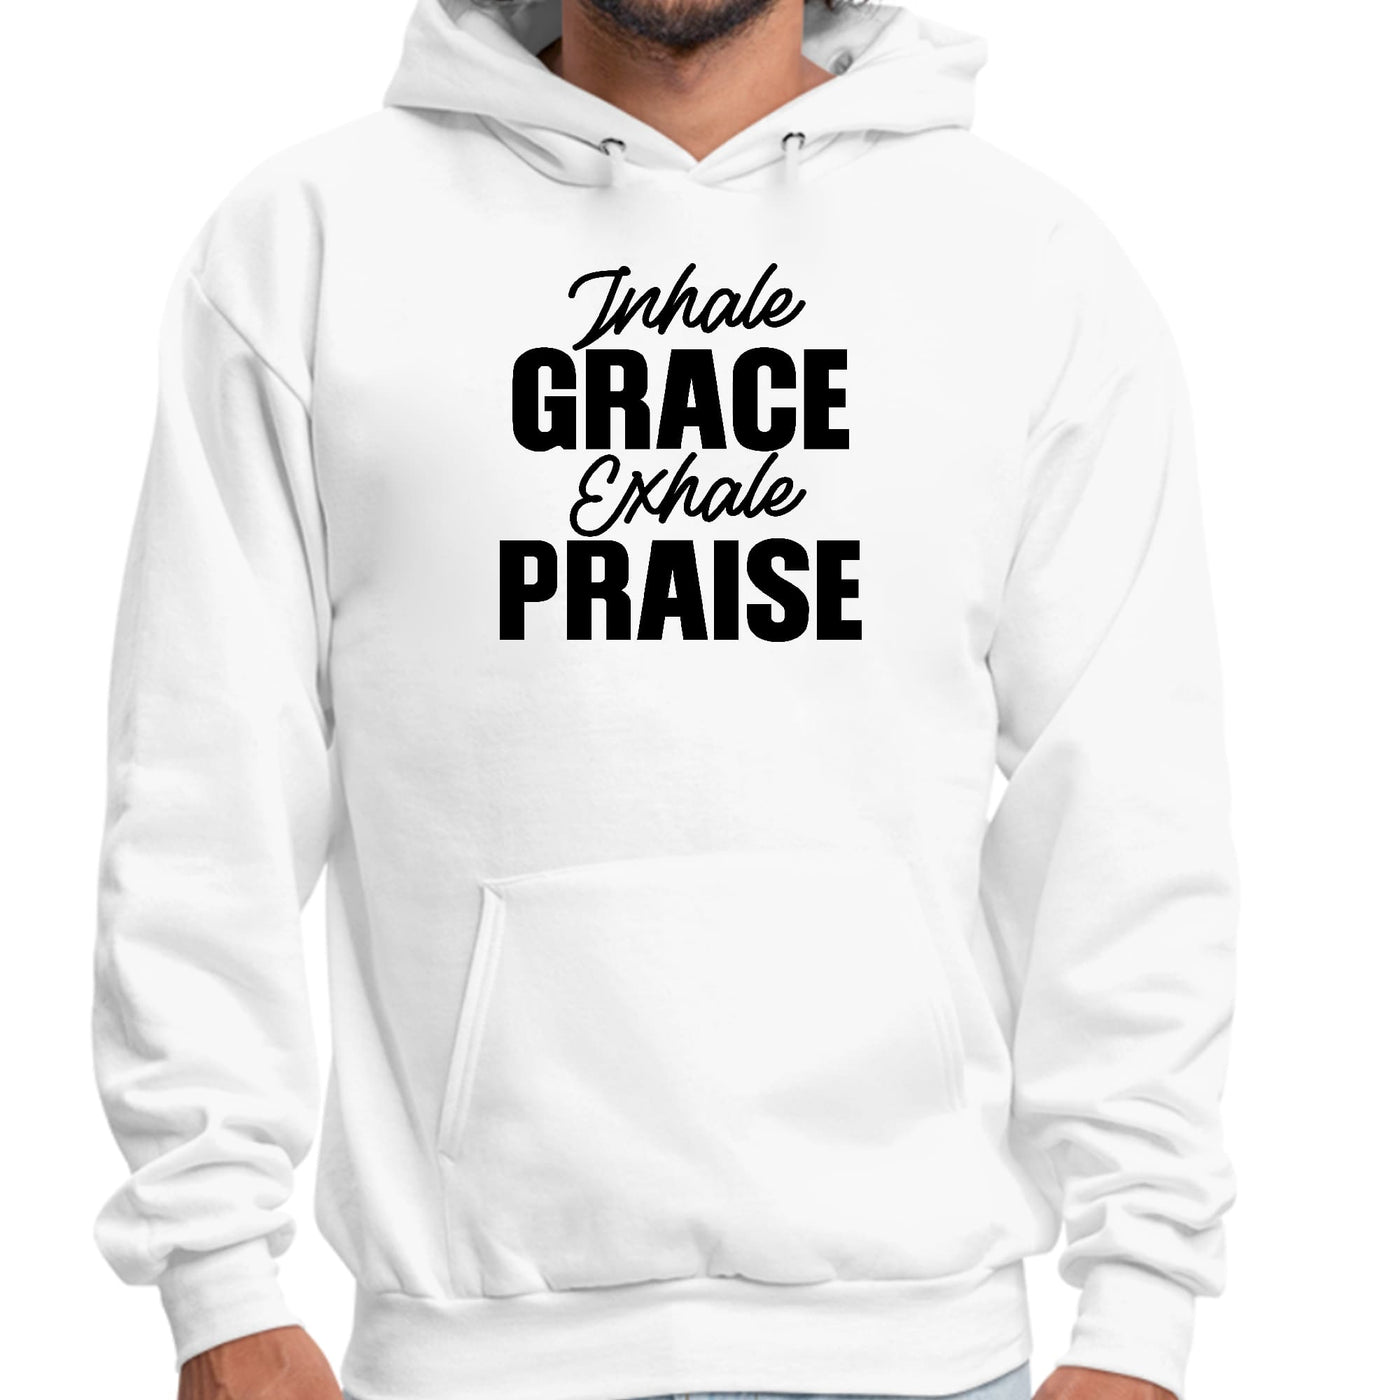 Mens Graphic Hoodie Inhale Grace Exhale Praise Black Illustration - Unisex